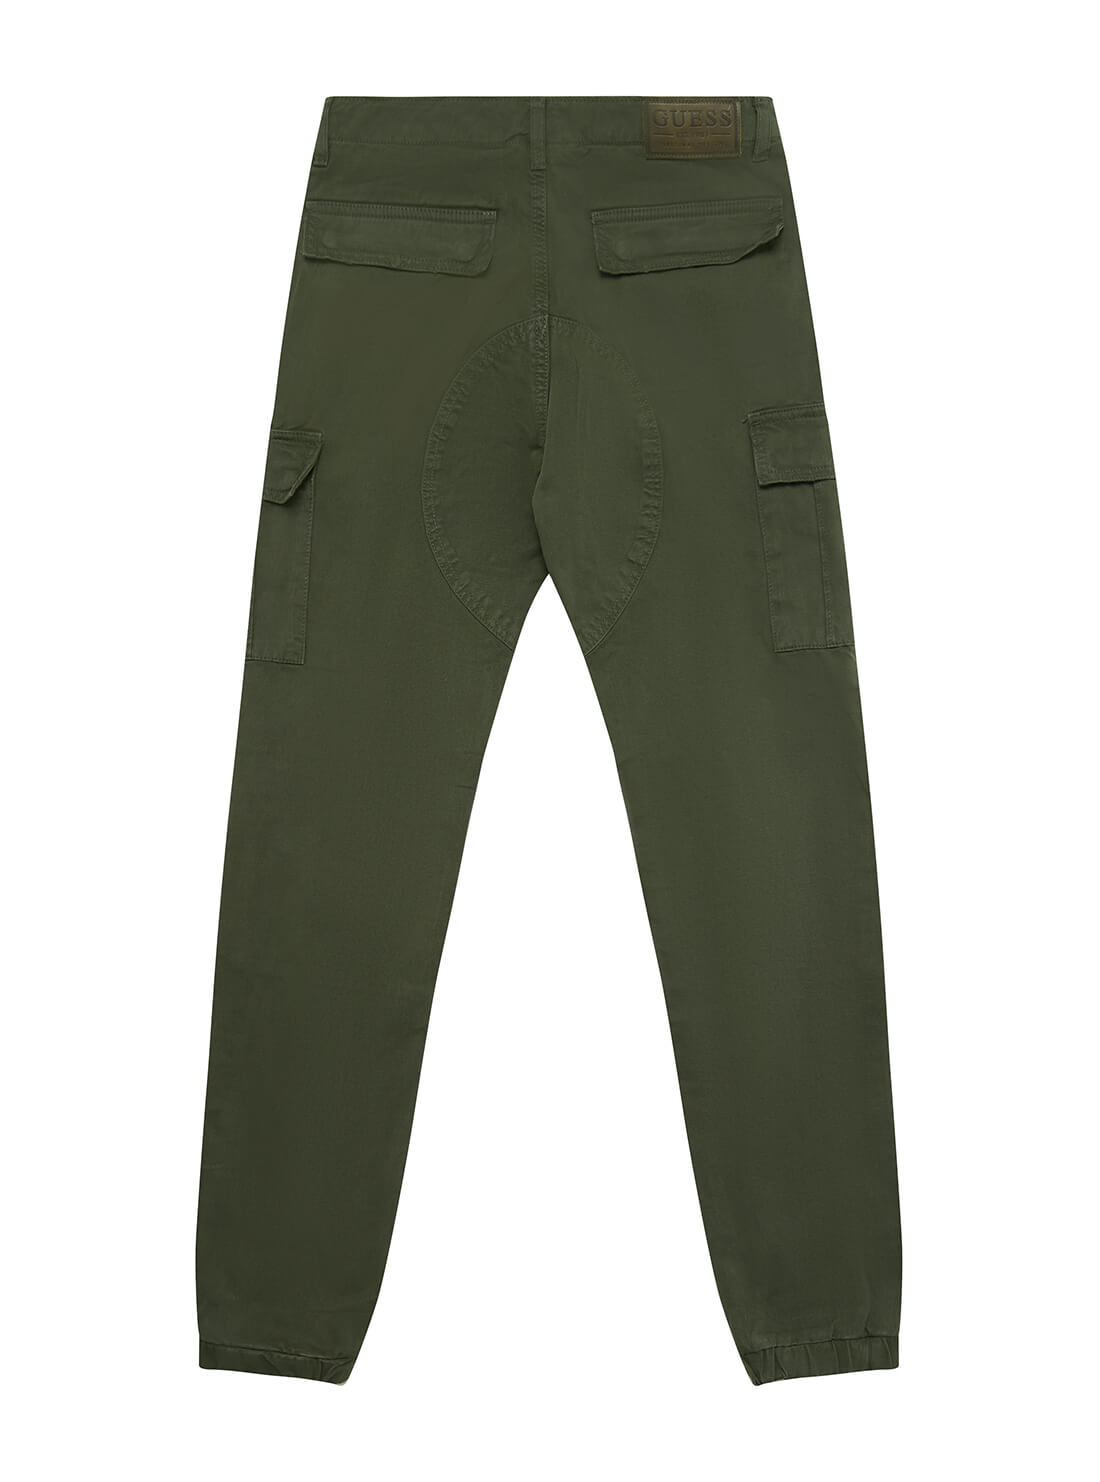 GUESS Big Boy Green Cargo Pants (7-16) L1YB09WE1L0 Back View